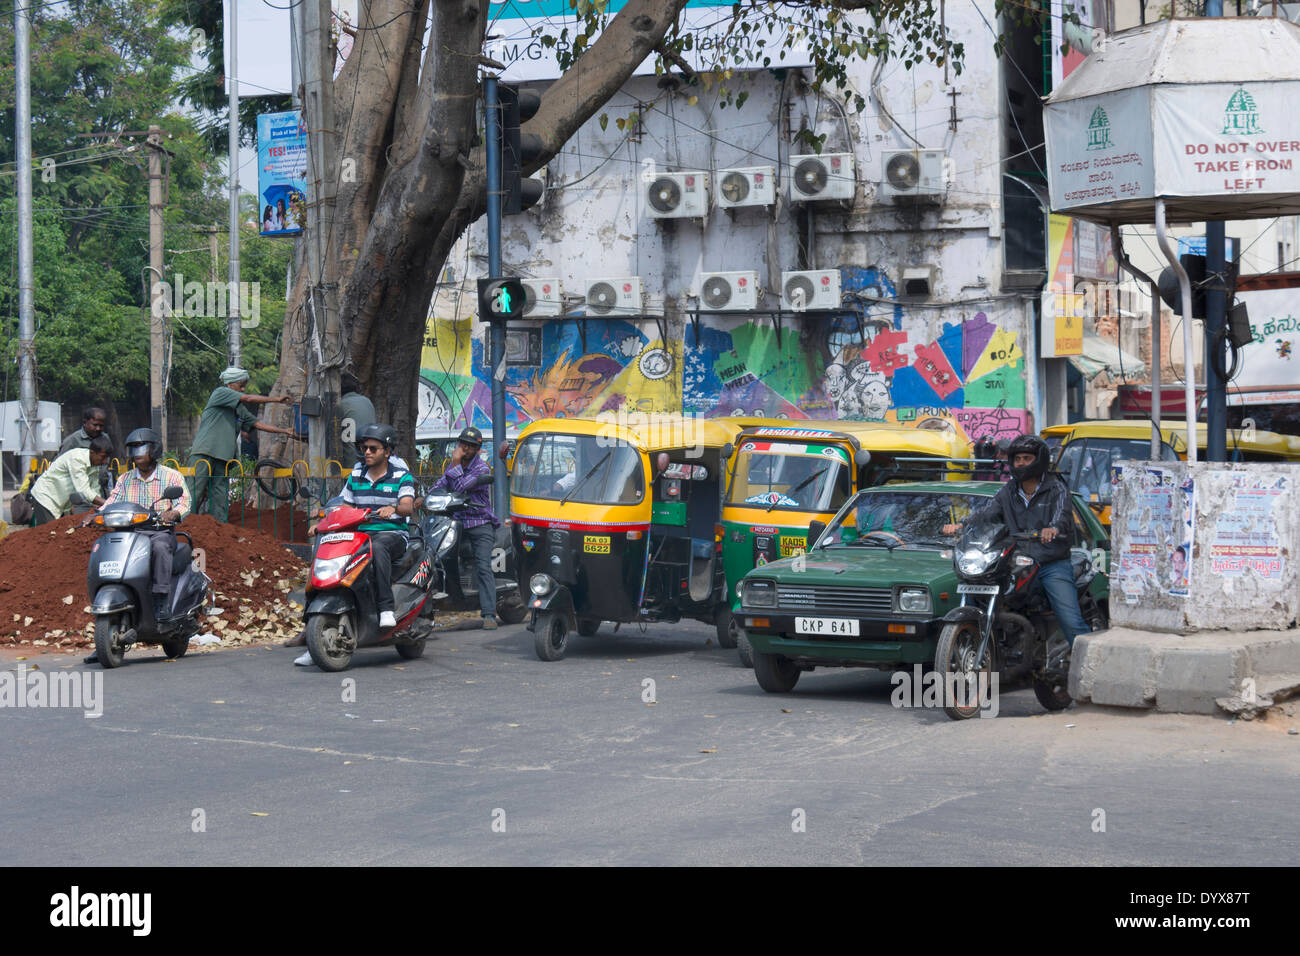 A street scene showing people and traffic in Bangalore, Karnataka, India Stock Photo